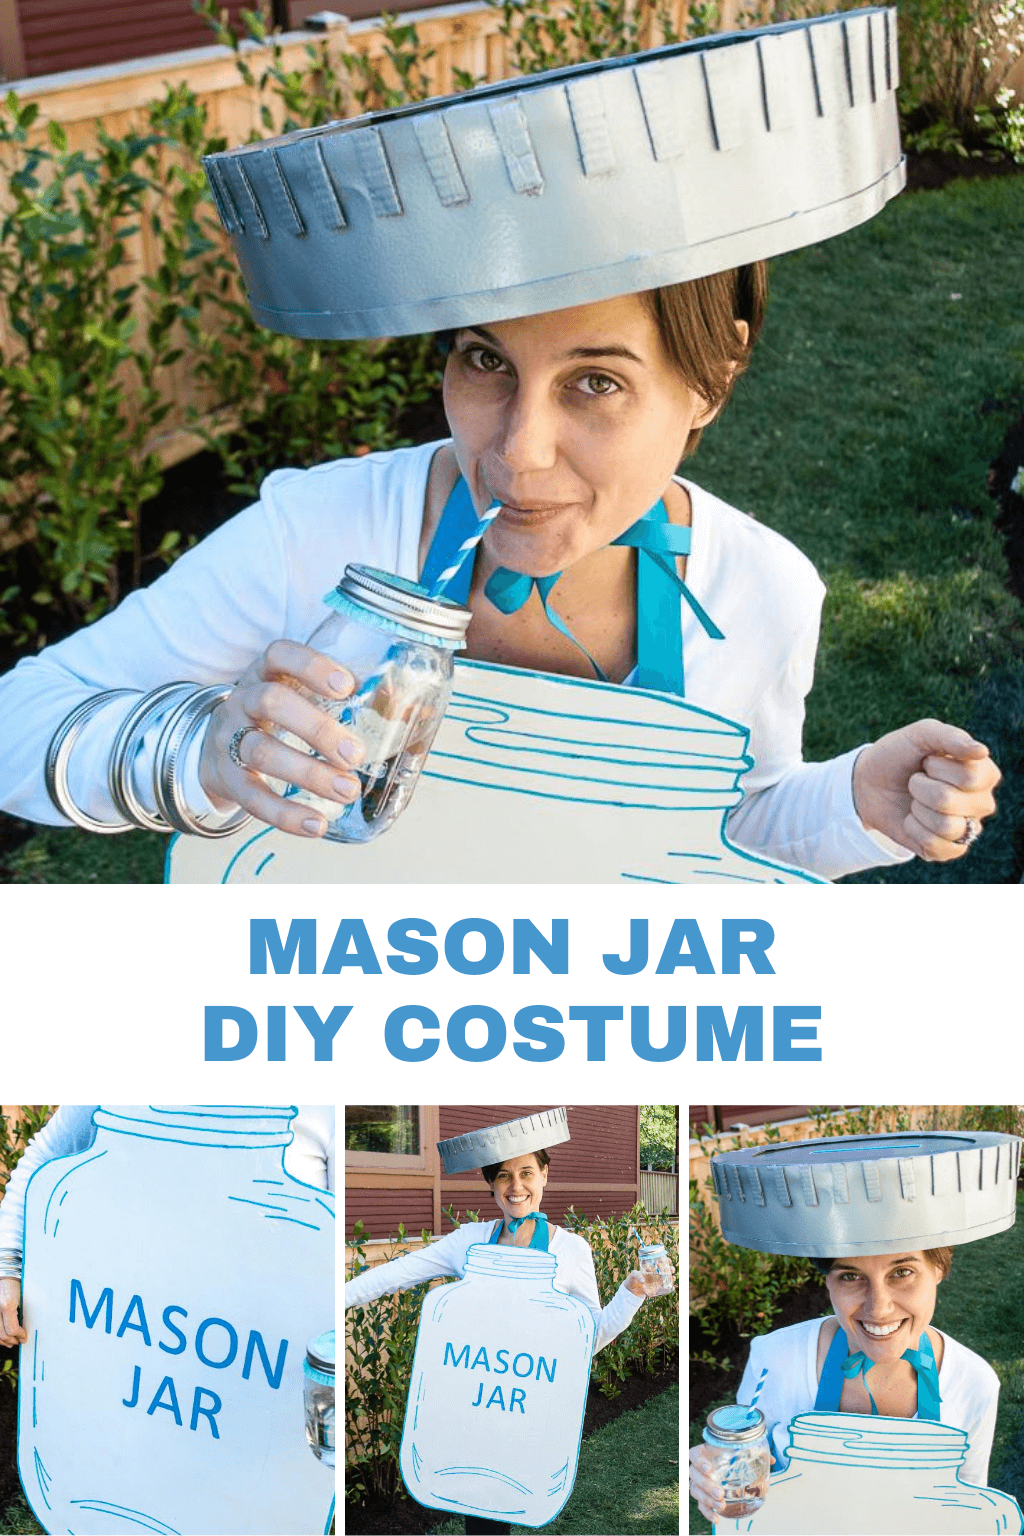 Mason Jar with Lid creative DIY Halloween Costume Idea for Women